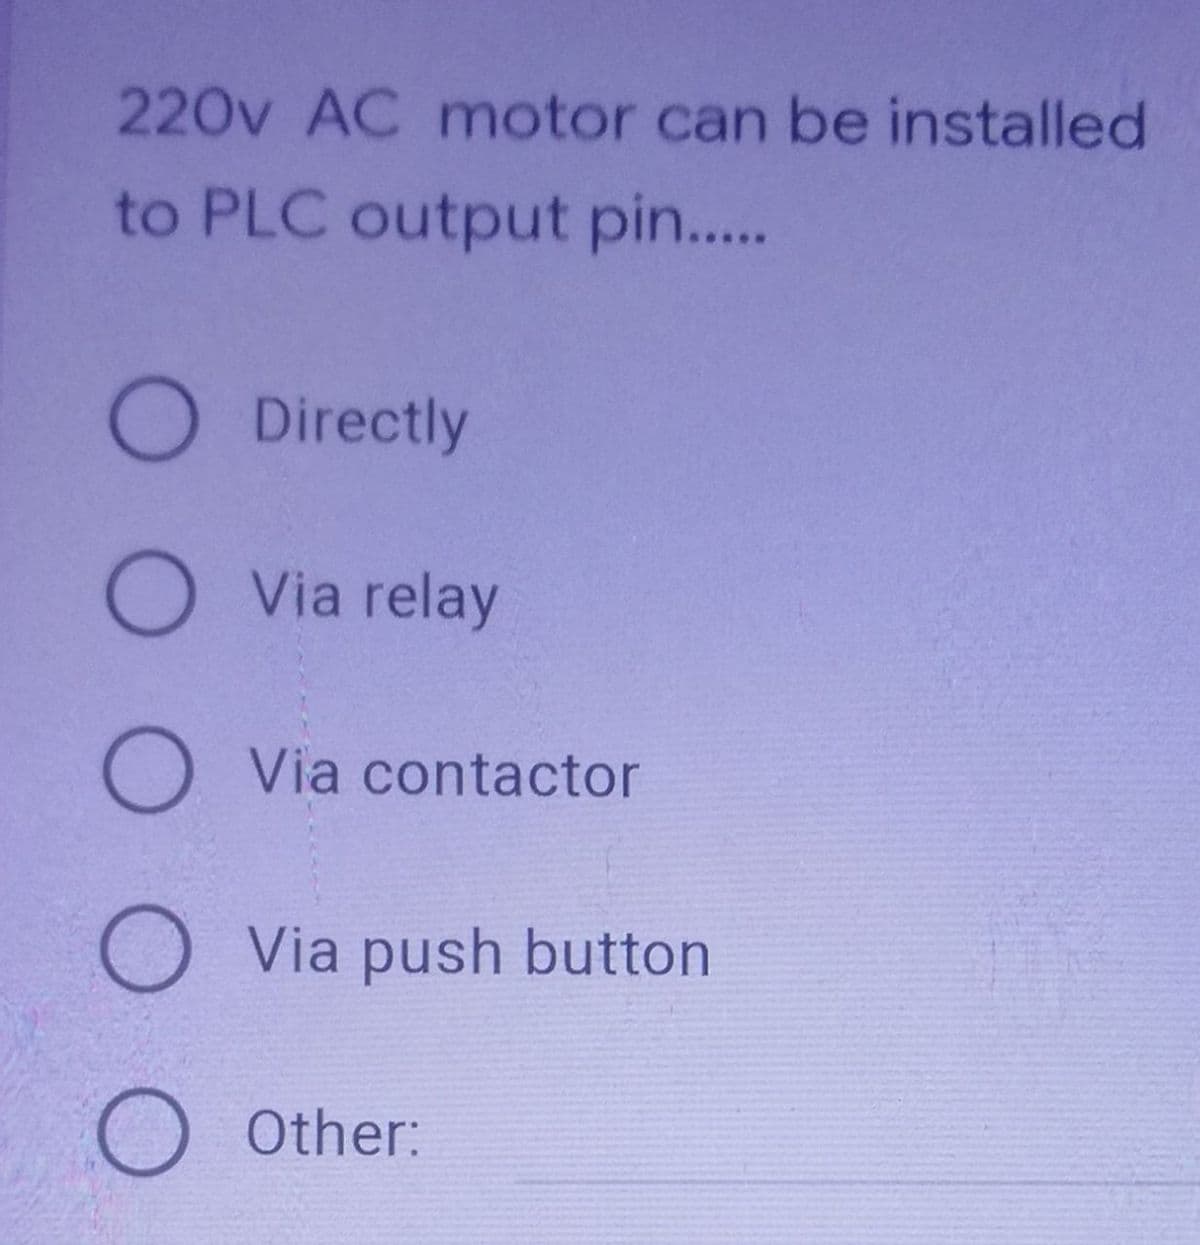 220v AC motor can be installed
to PLC output pin.....
O Directly
O Via relay
O Via contactor
O Via push button
O
Other: